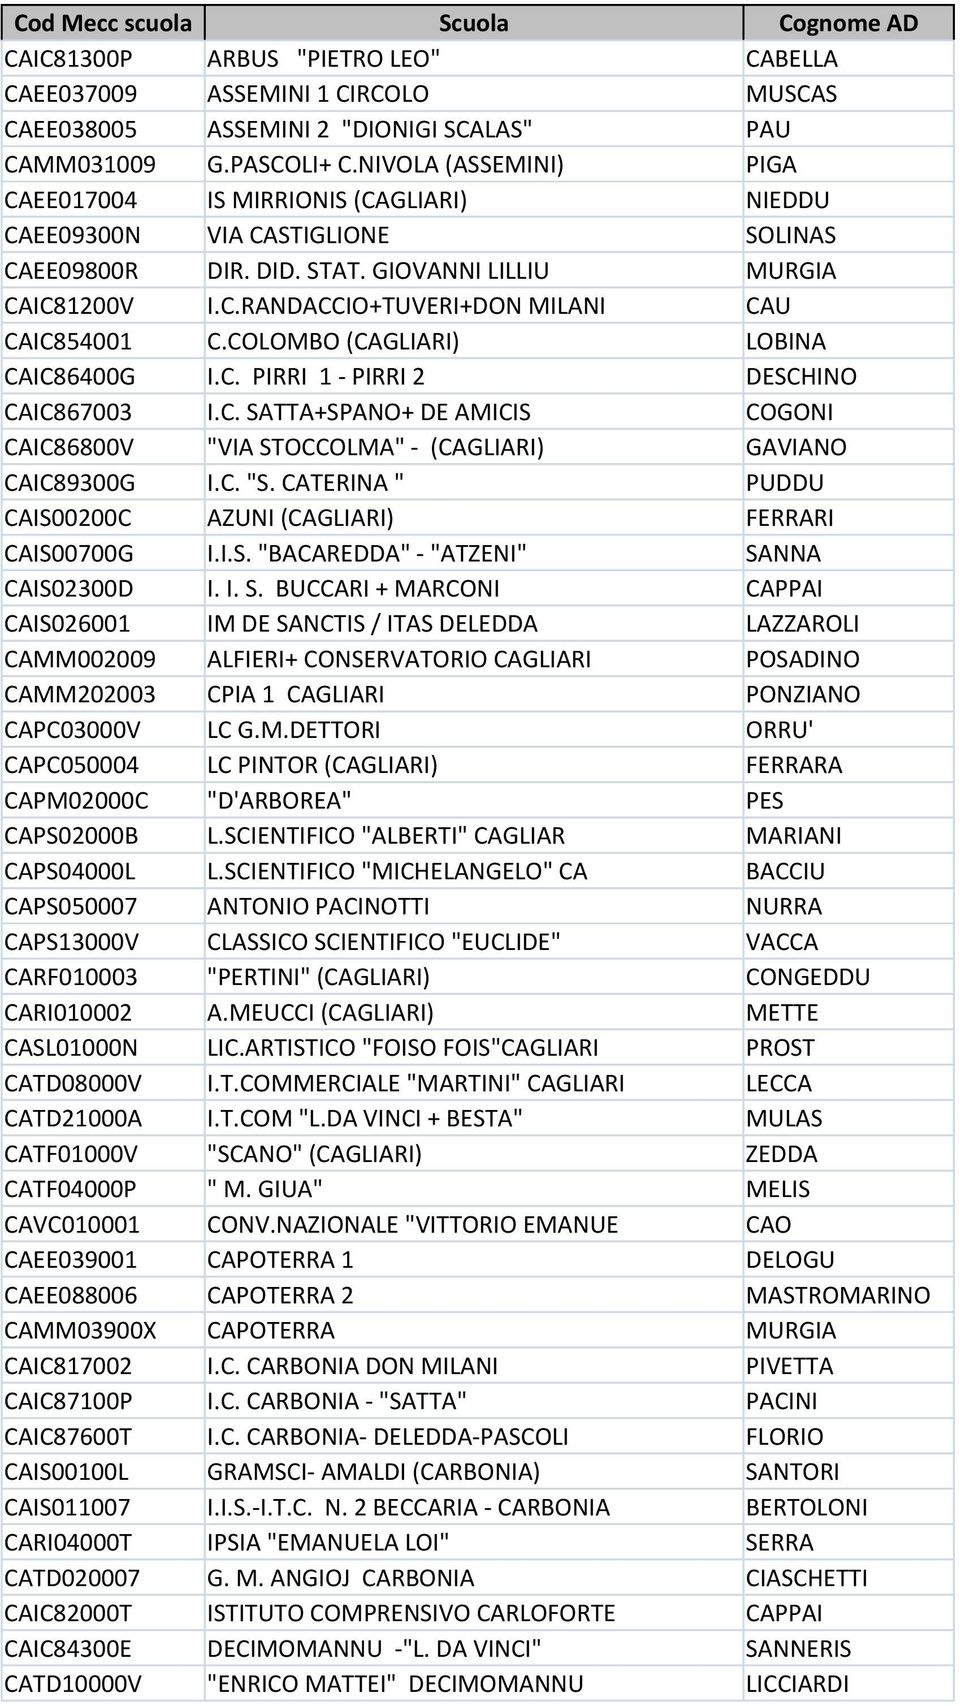 COLOMBO (CAGLIARI) LOBINA CAIC86400G I.C. PIRRI 1 - PIRRI 2 DESCHINO CAIC867003 I.C. SATTA+SPANO+ DE AMICIS COGONI CAIC86800V "VIA STOCCOLMA" - (CAGLIARI) GAVIANO CAIC89300G I.C. "S.